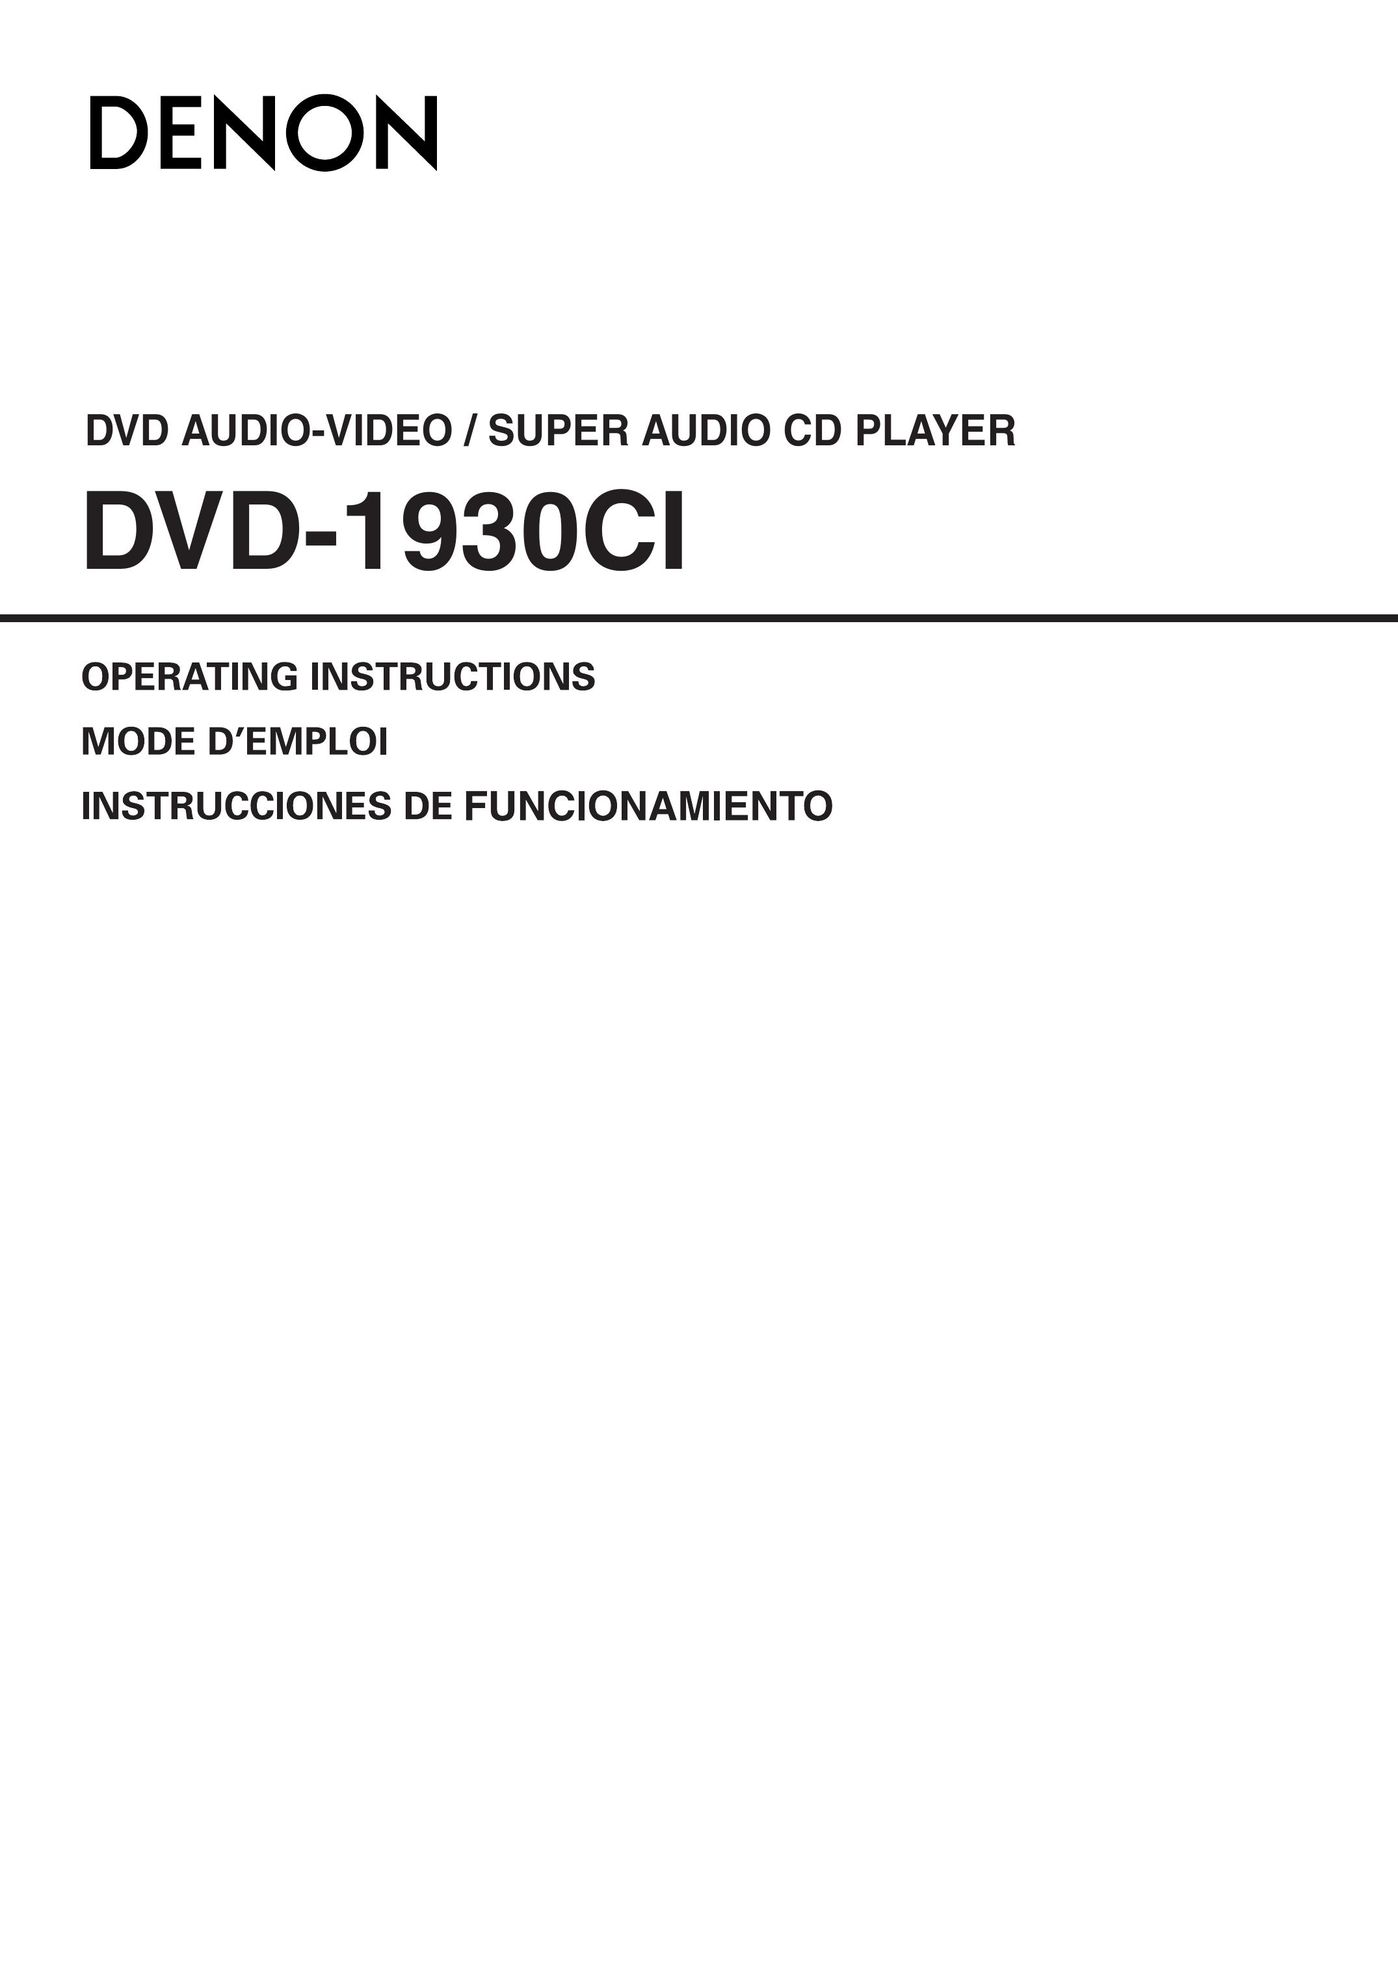 Denon DVD-1930CI CD Player User Manual